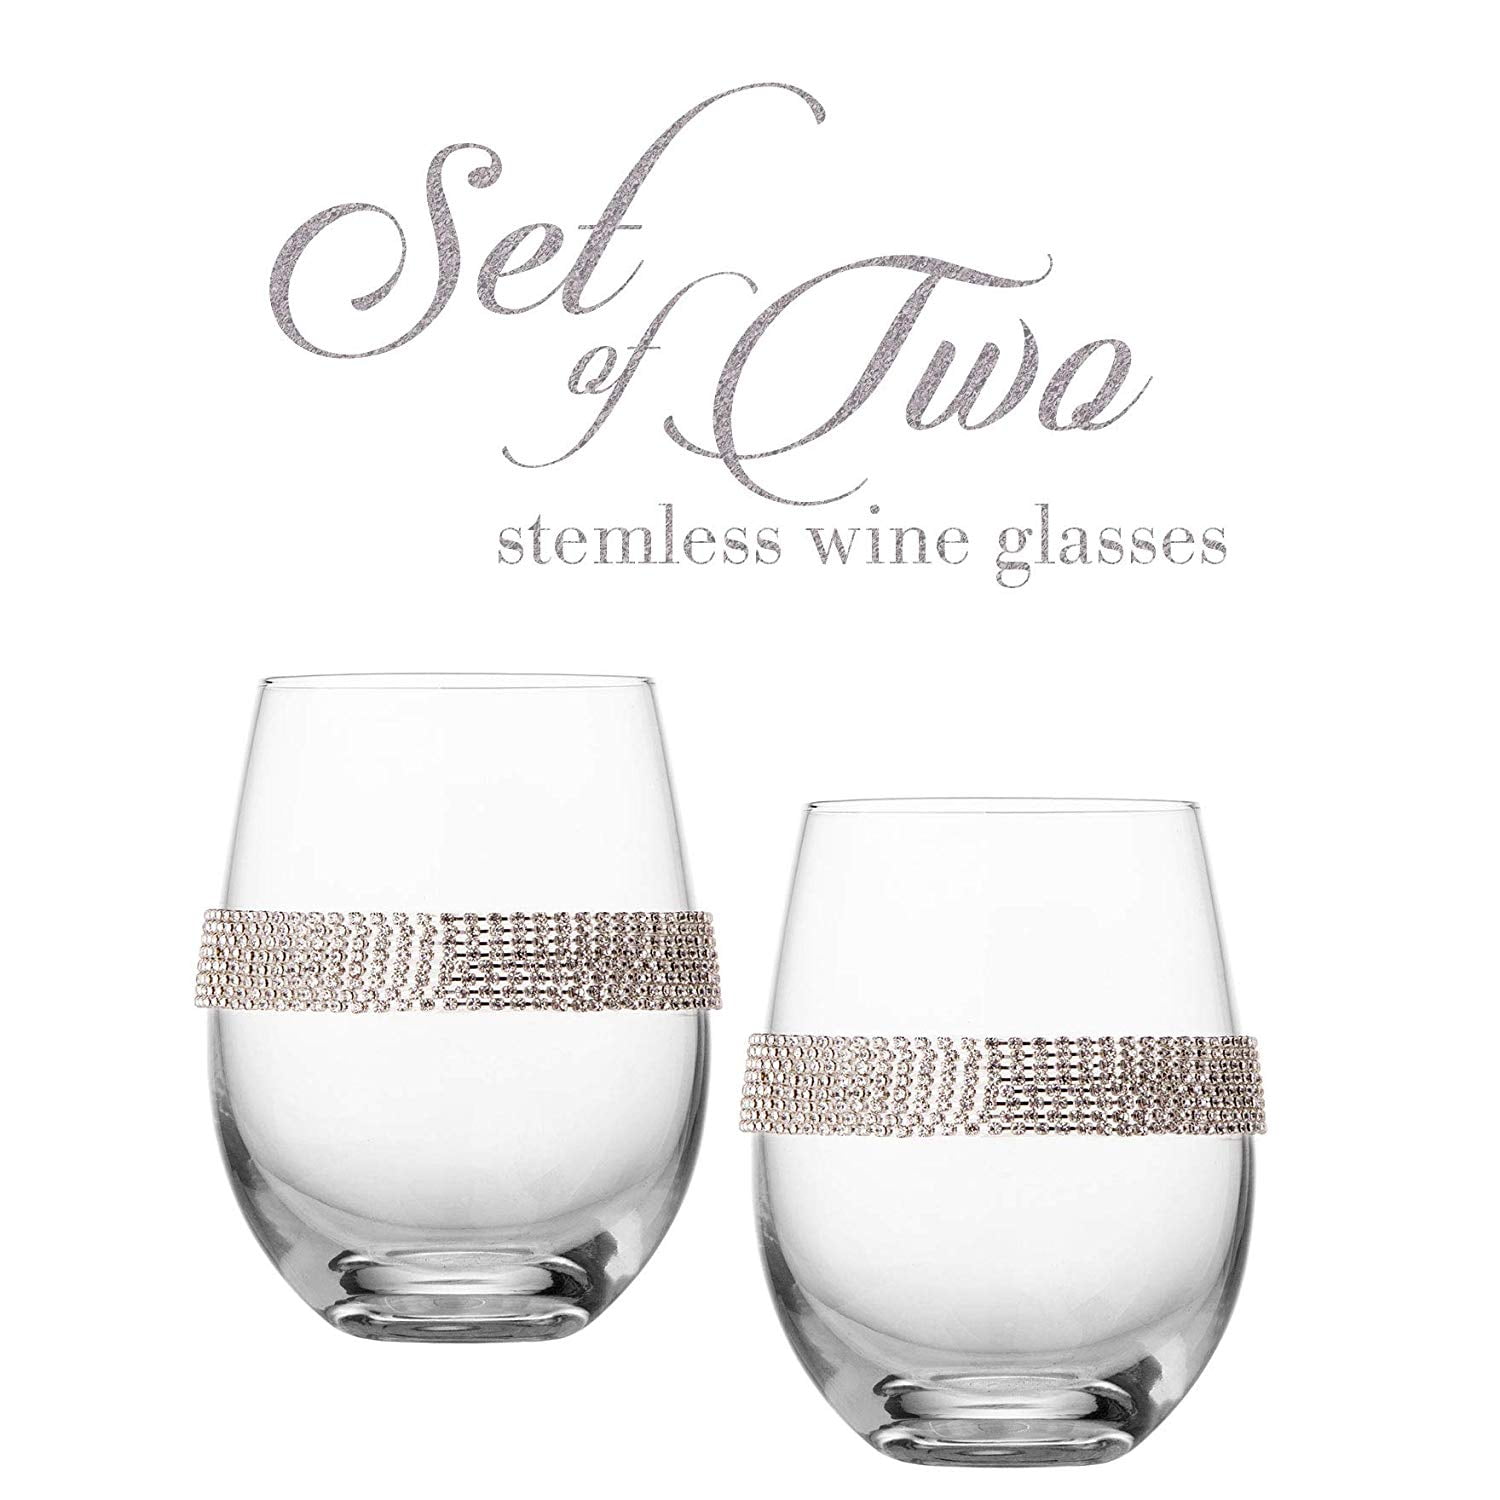 Berkware Classy Rhinestone Embellished Long Stem Rose Wine Glasses